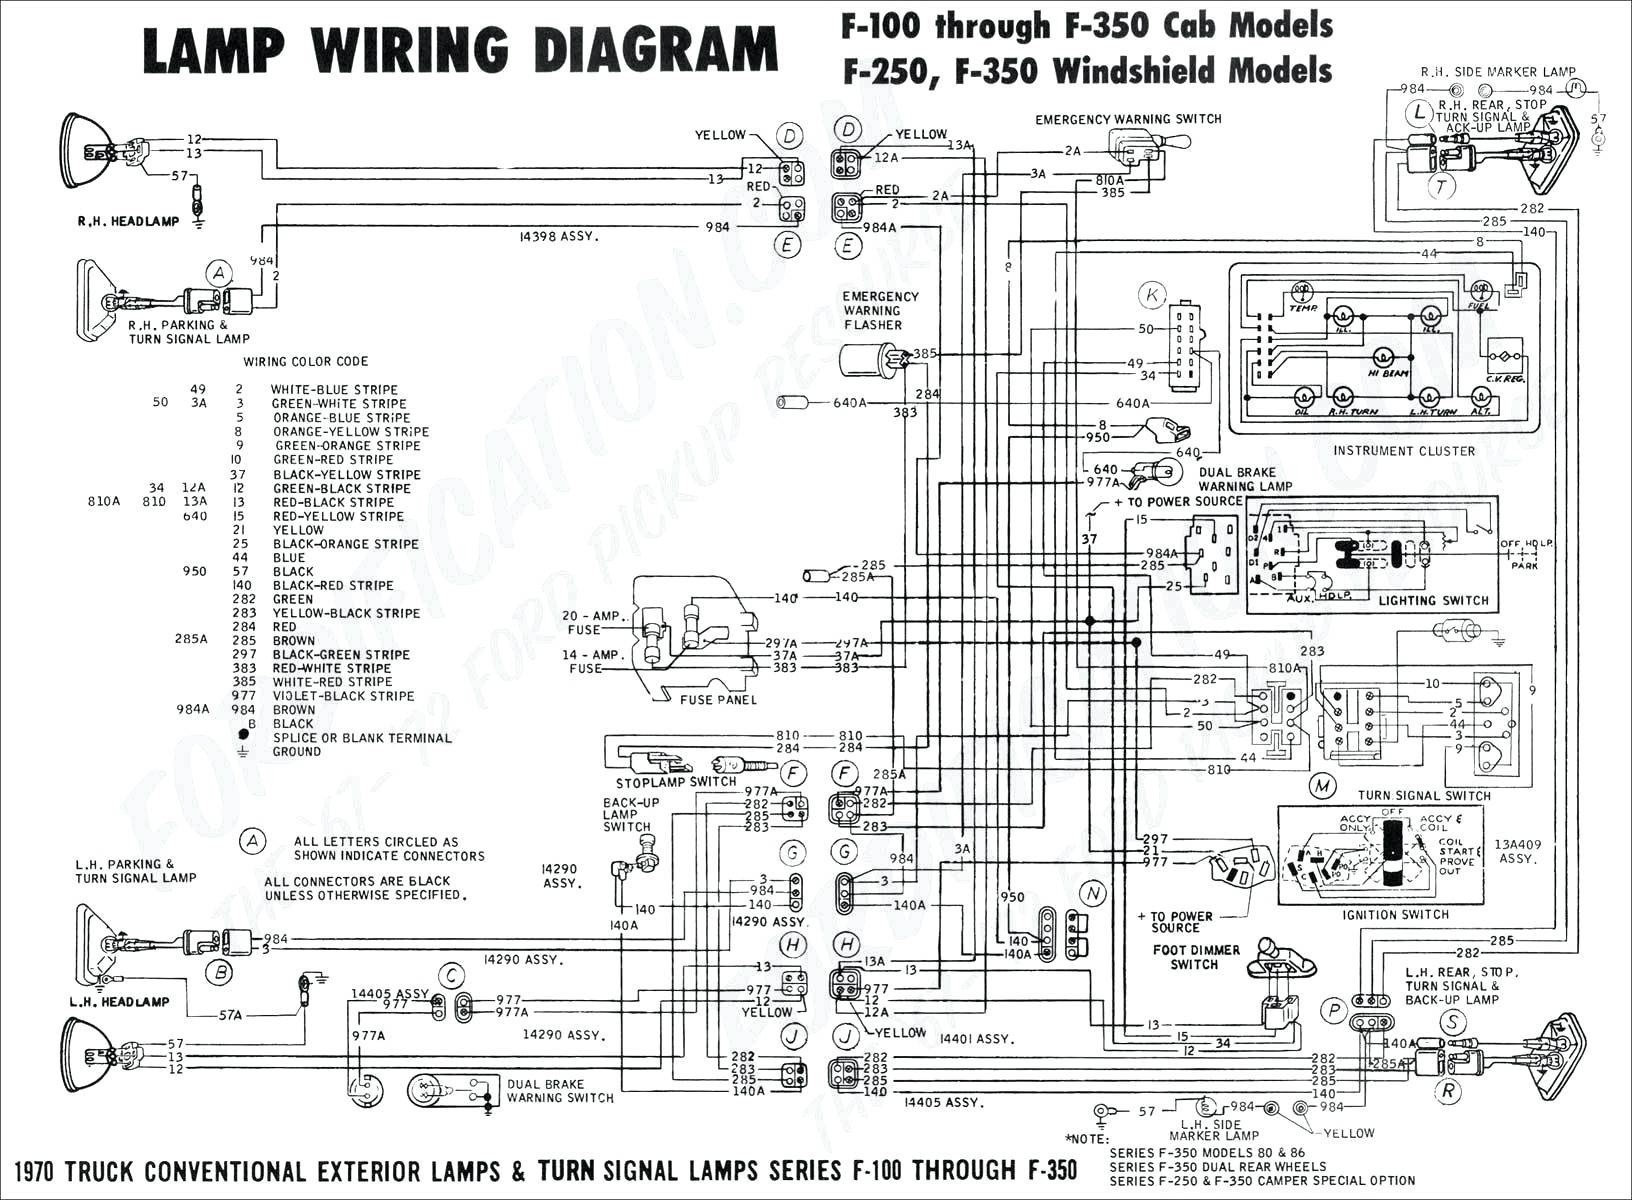 2002 Nissan Maxima Engine Diagram 2002 Nissan Sentra Wiring Diagram 2004 Chevy Trailblazer Heater Of 2002 Nissan Maxima Engine Diagram